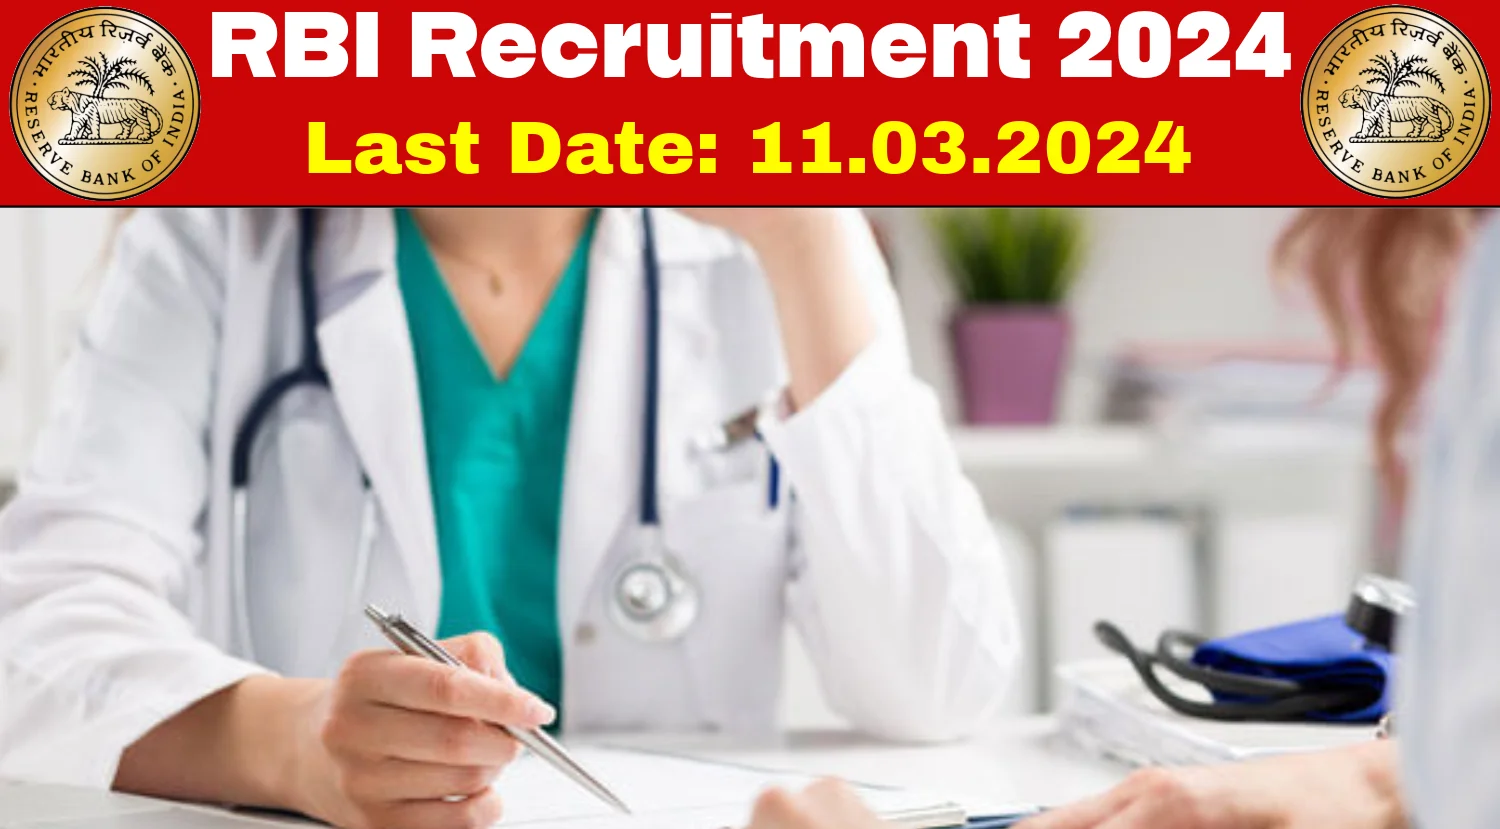 RBI BMC Recruitment 2024 Notification Out, Check Details